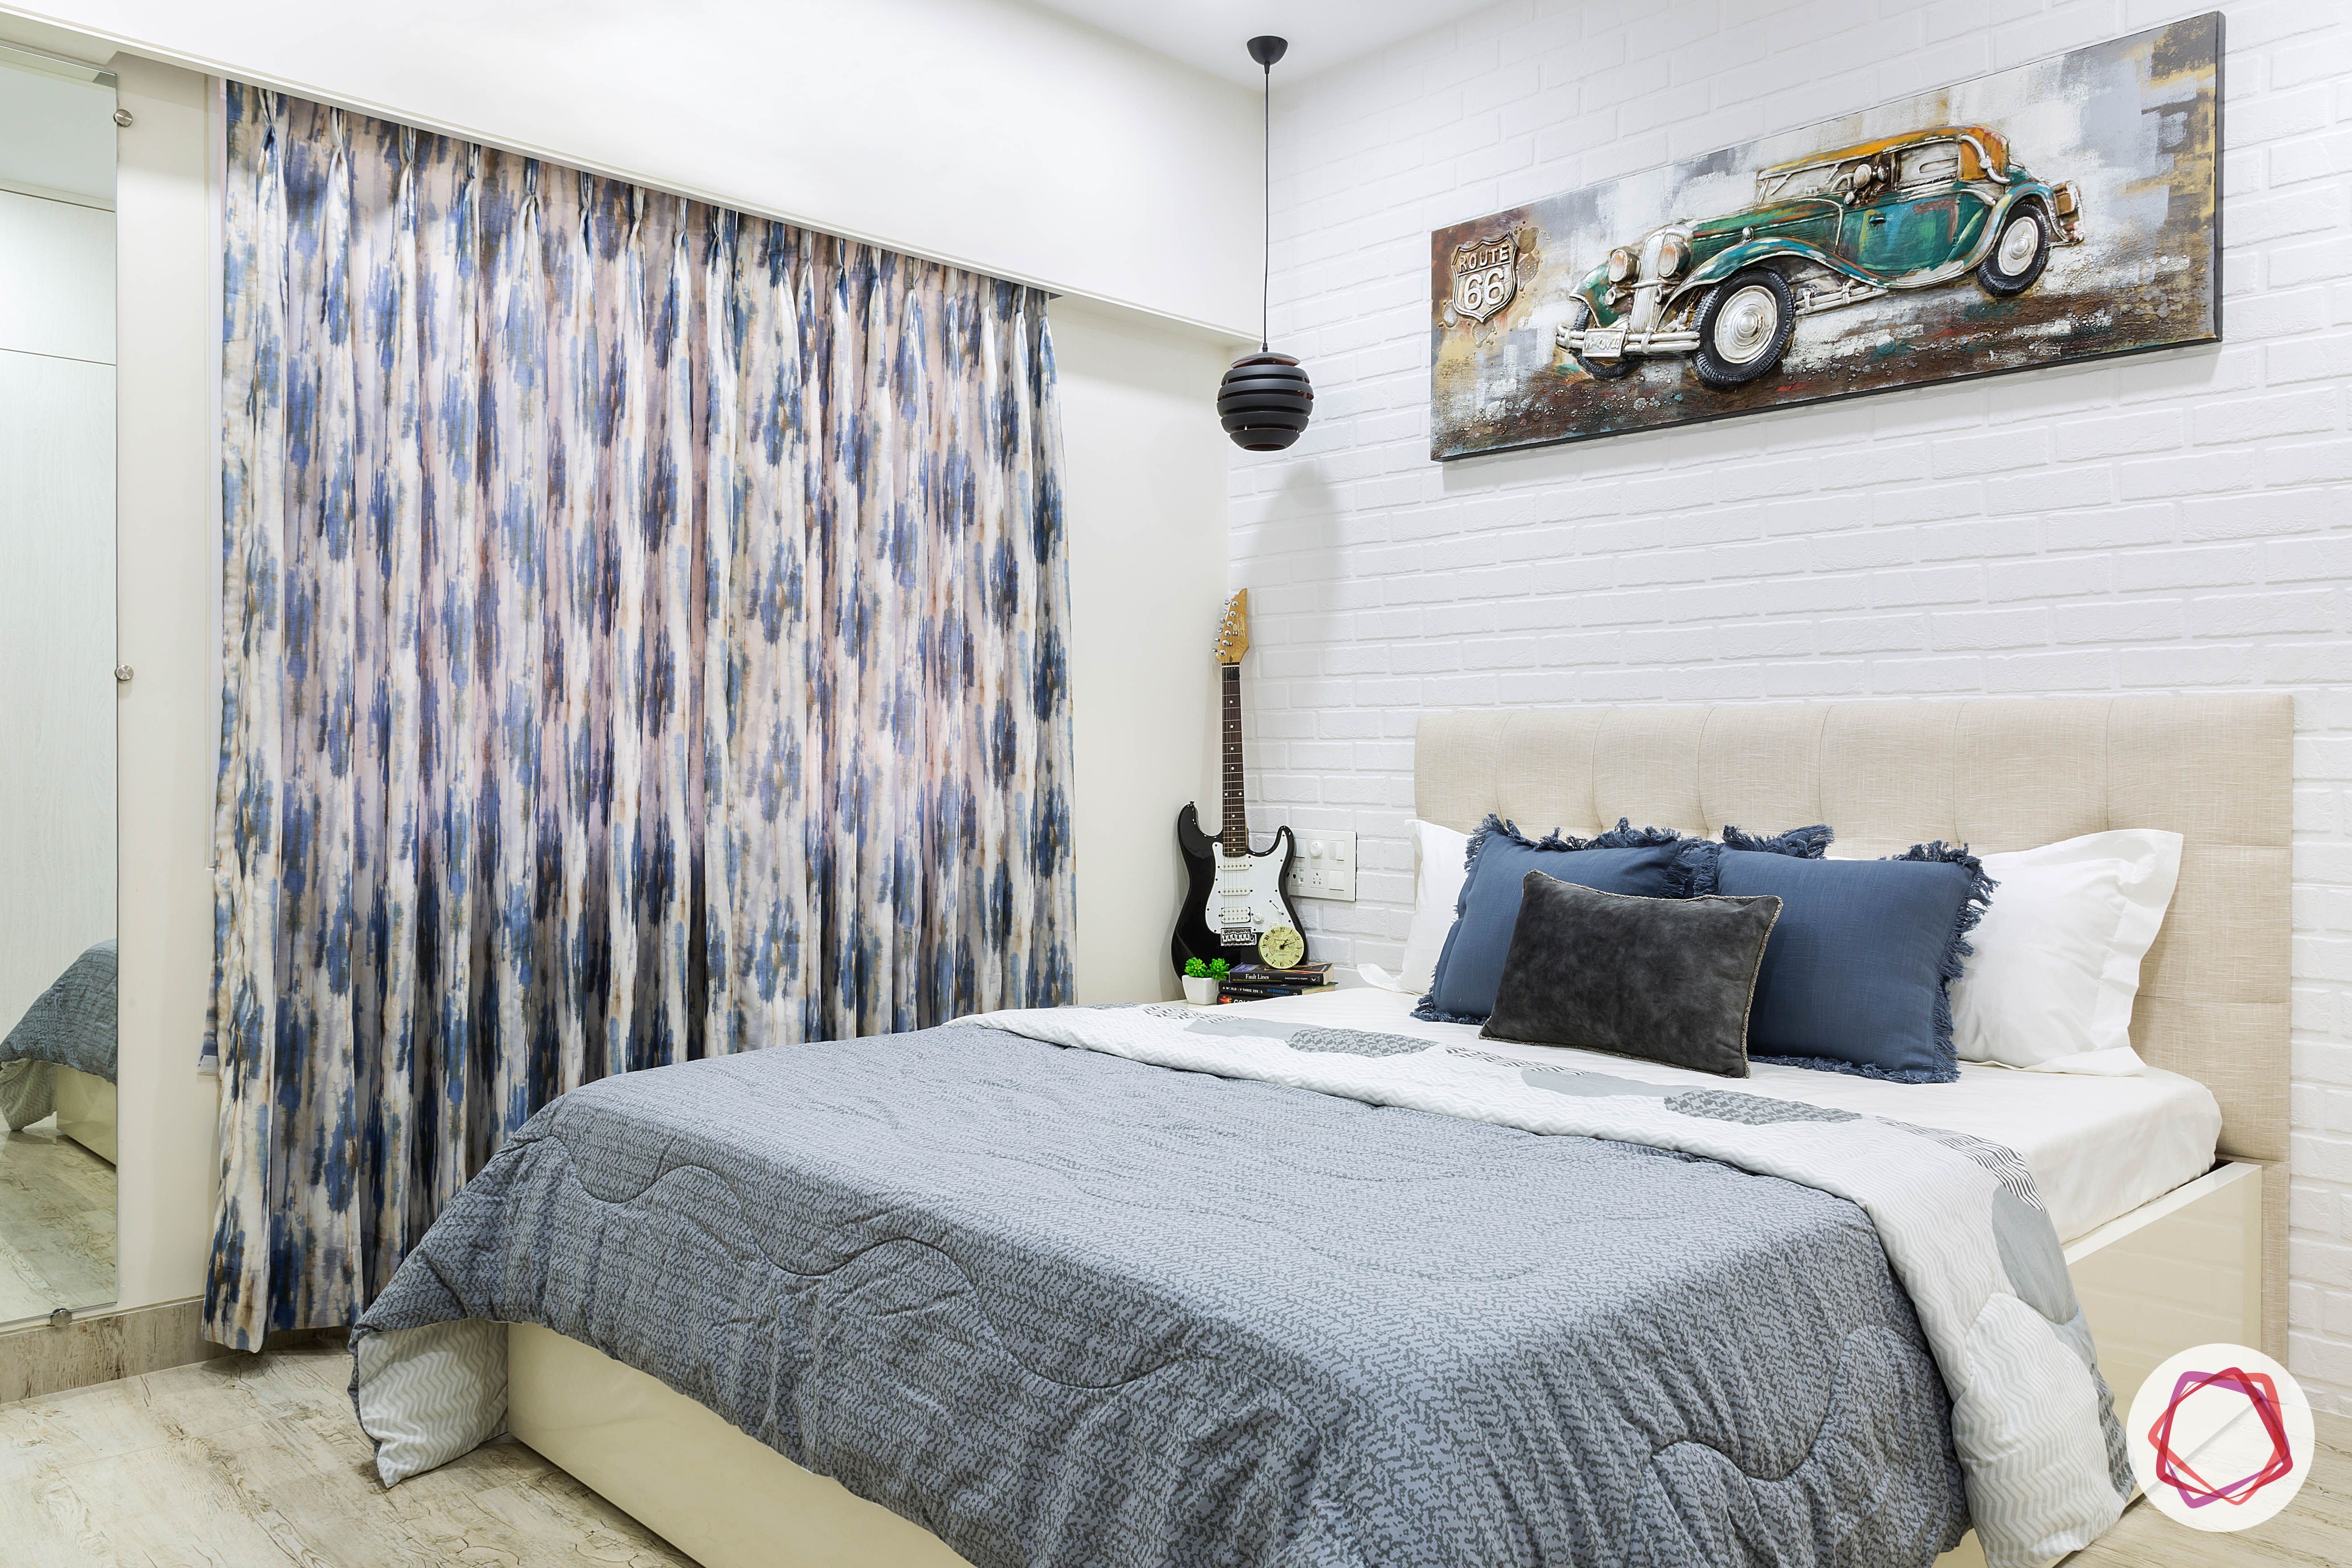 house-renovation-second-bedroom-brick-tiles-bed-beige-headboard-mirror-curtains